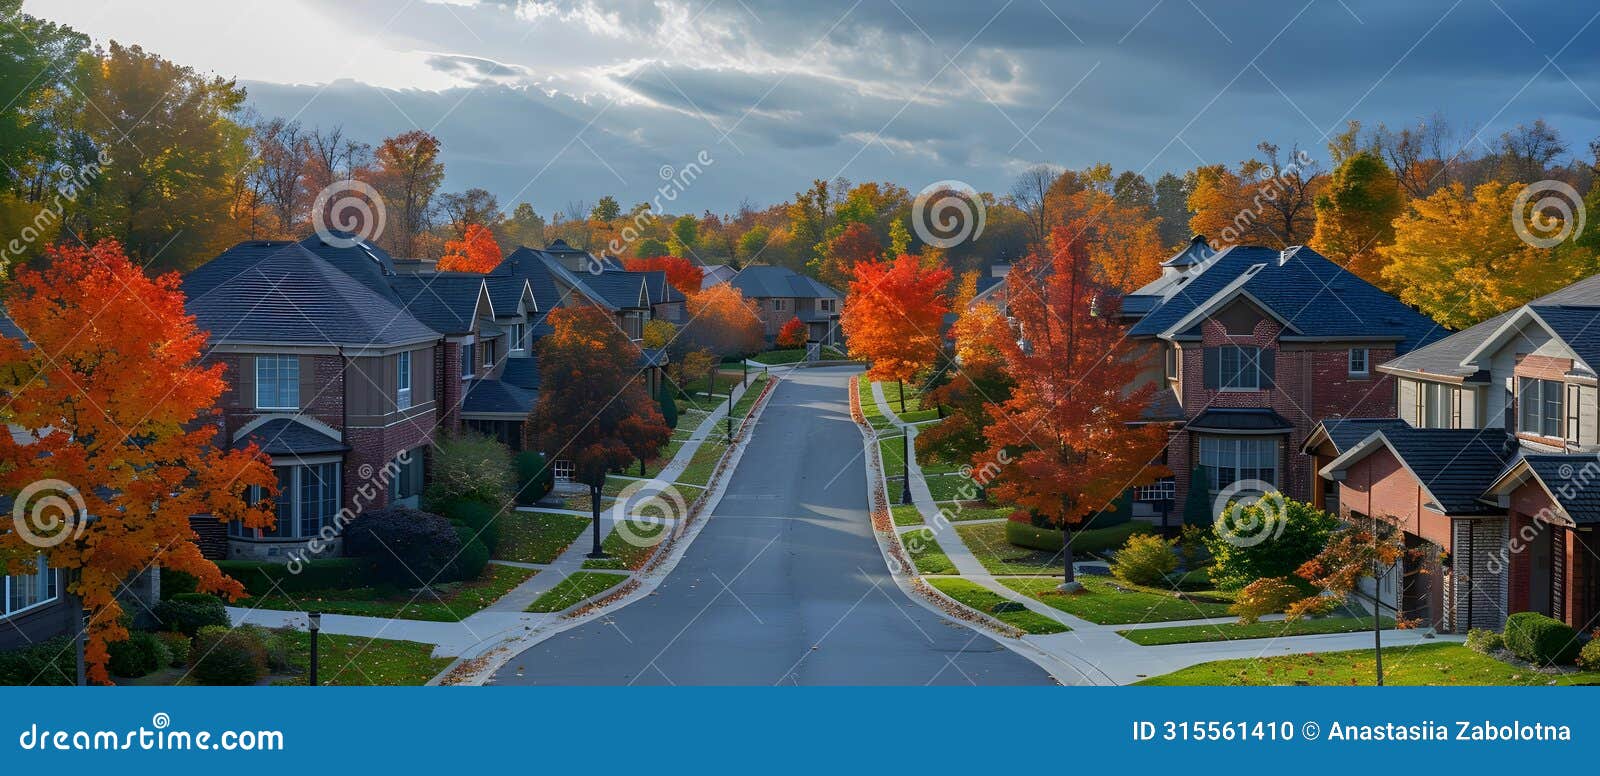 concept autumn colors, suburban streets, autumn suburbia tranquil streets amidst vibrant foliage